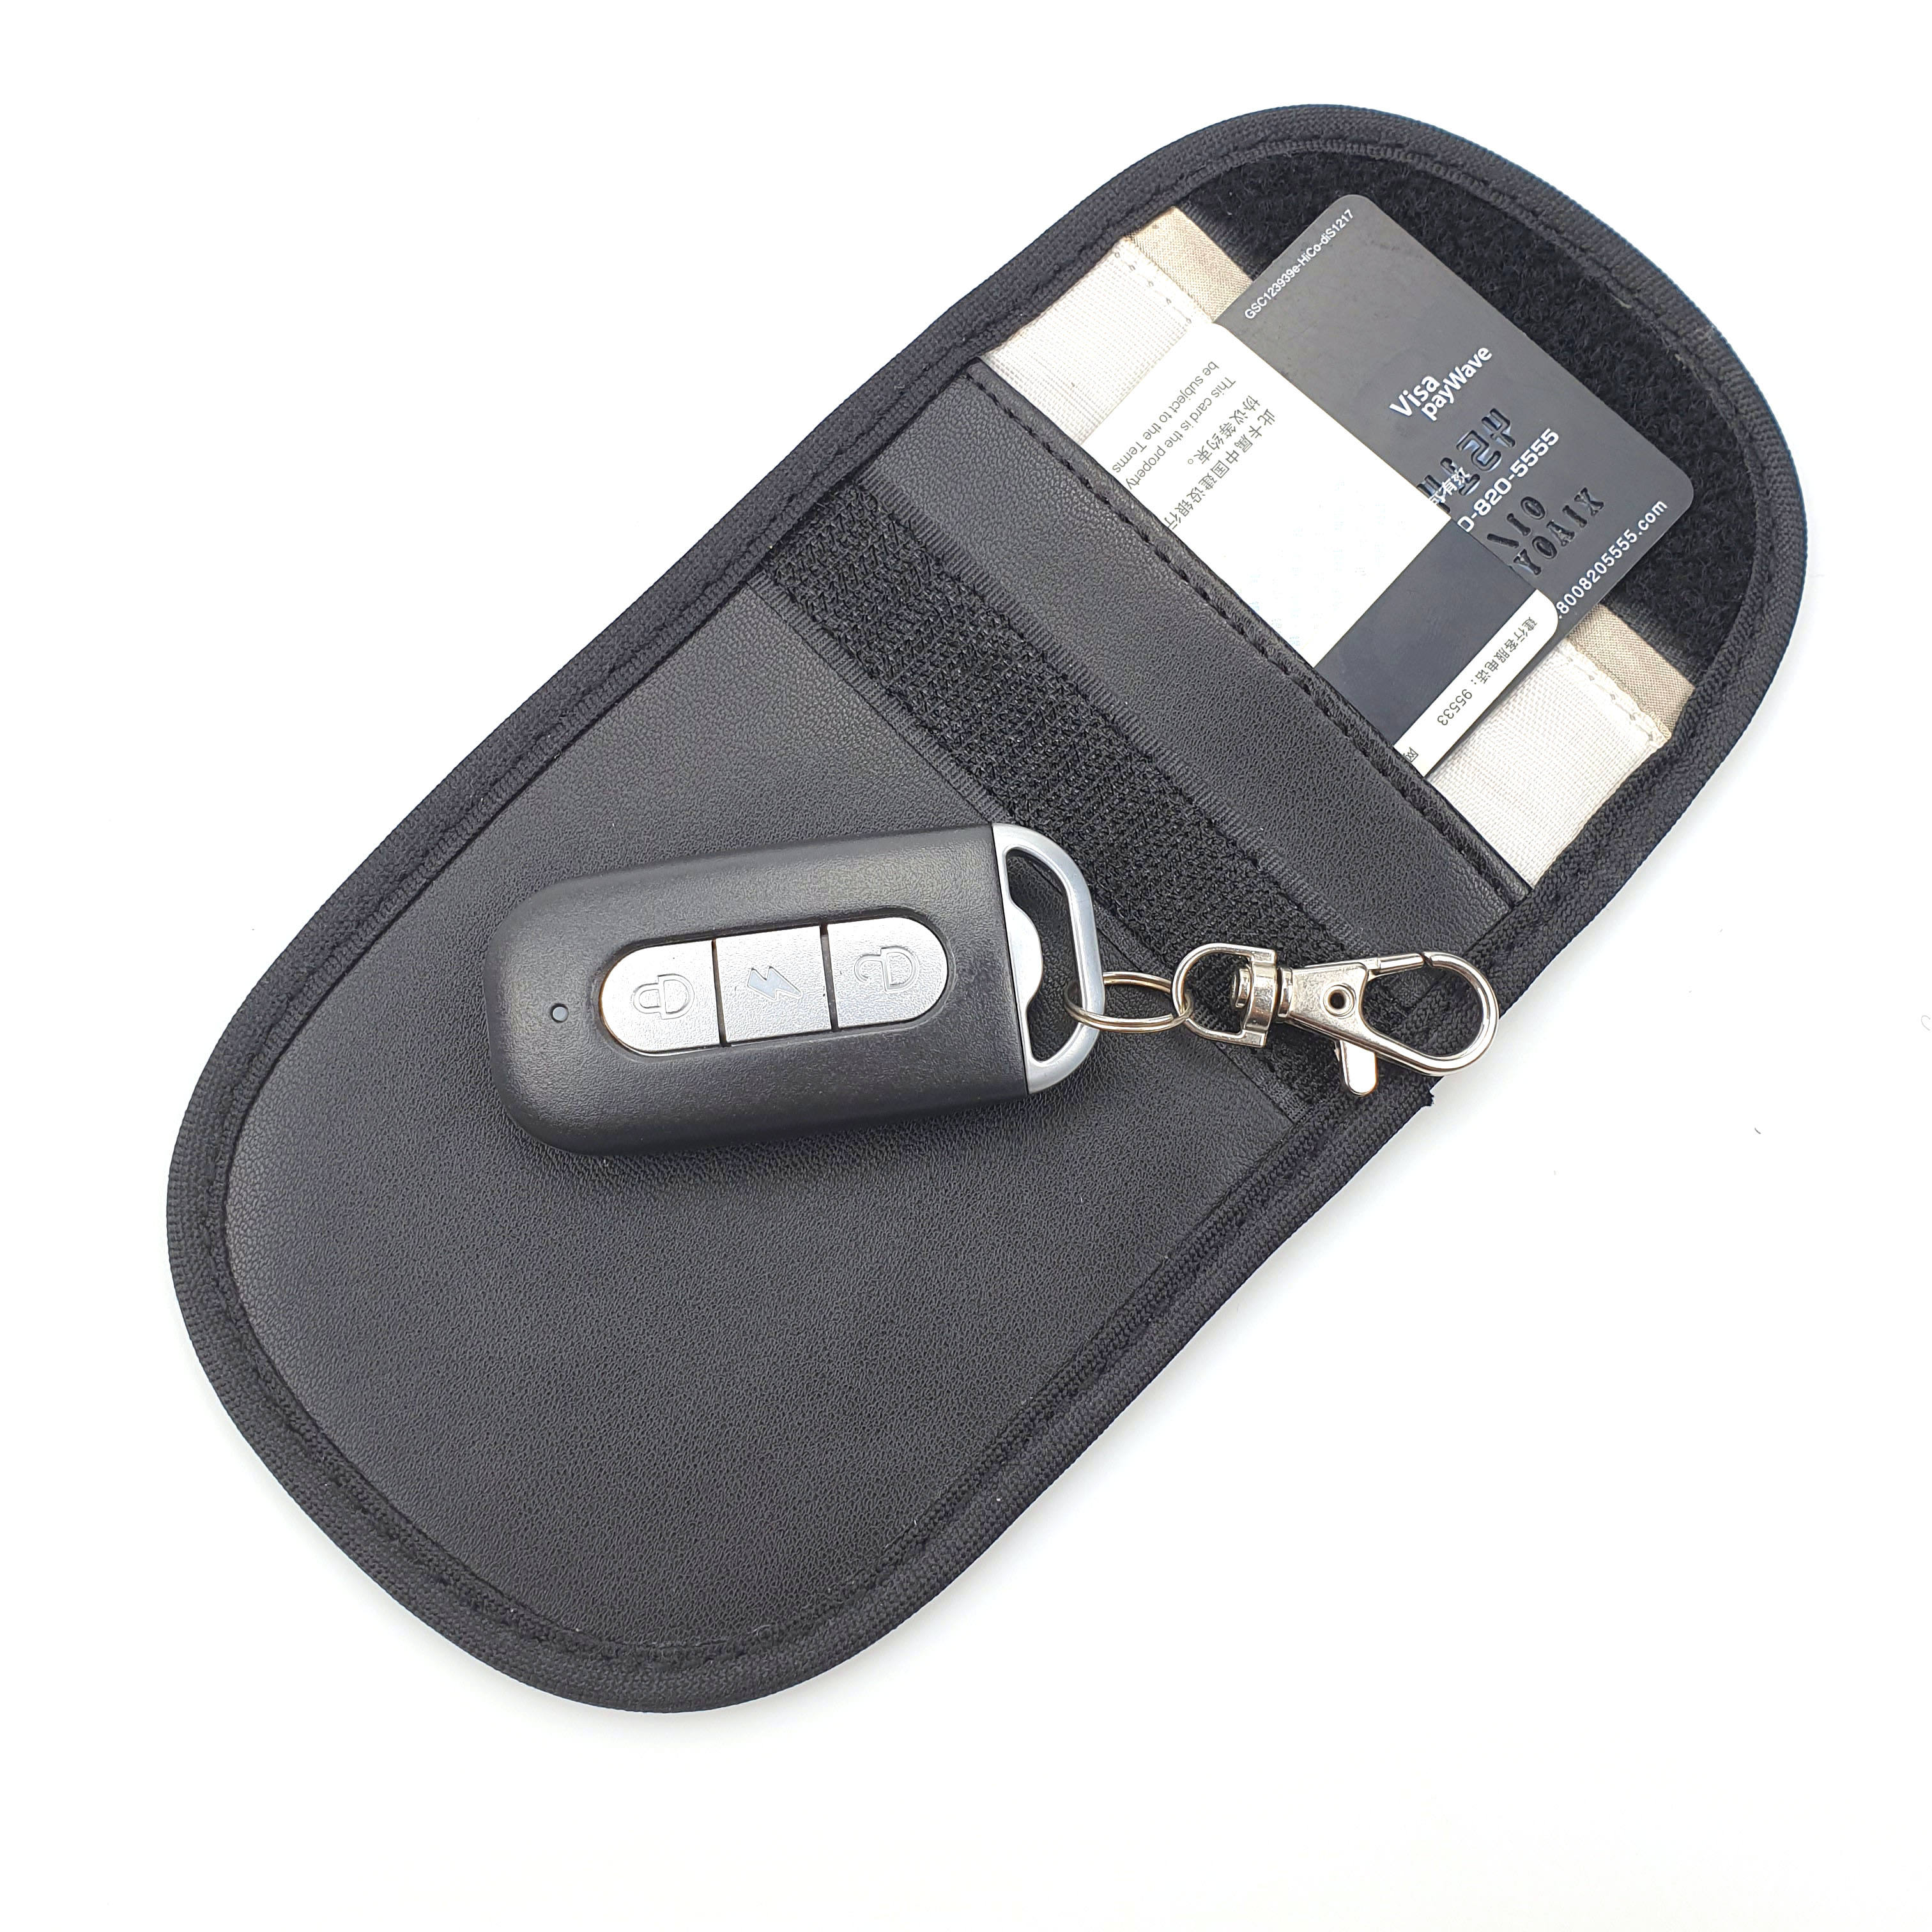 Faraday Key Fob Protector Box Faraday Box With Faraday Pouch For Car Keys